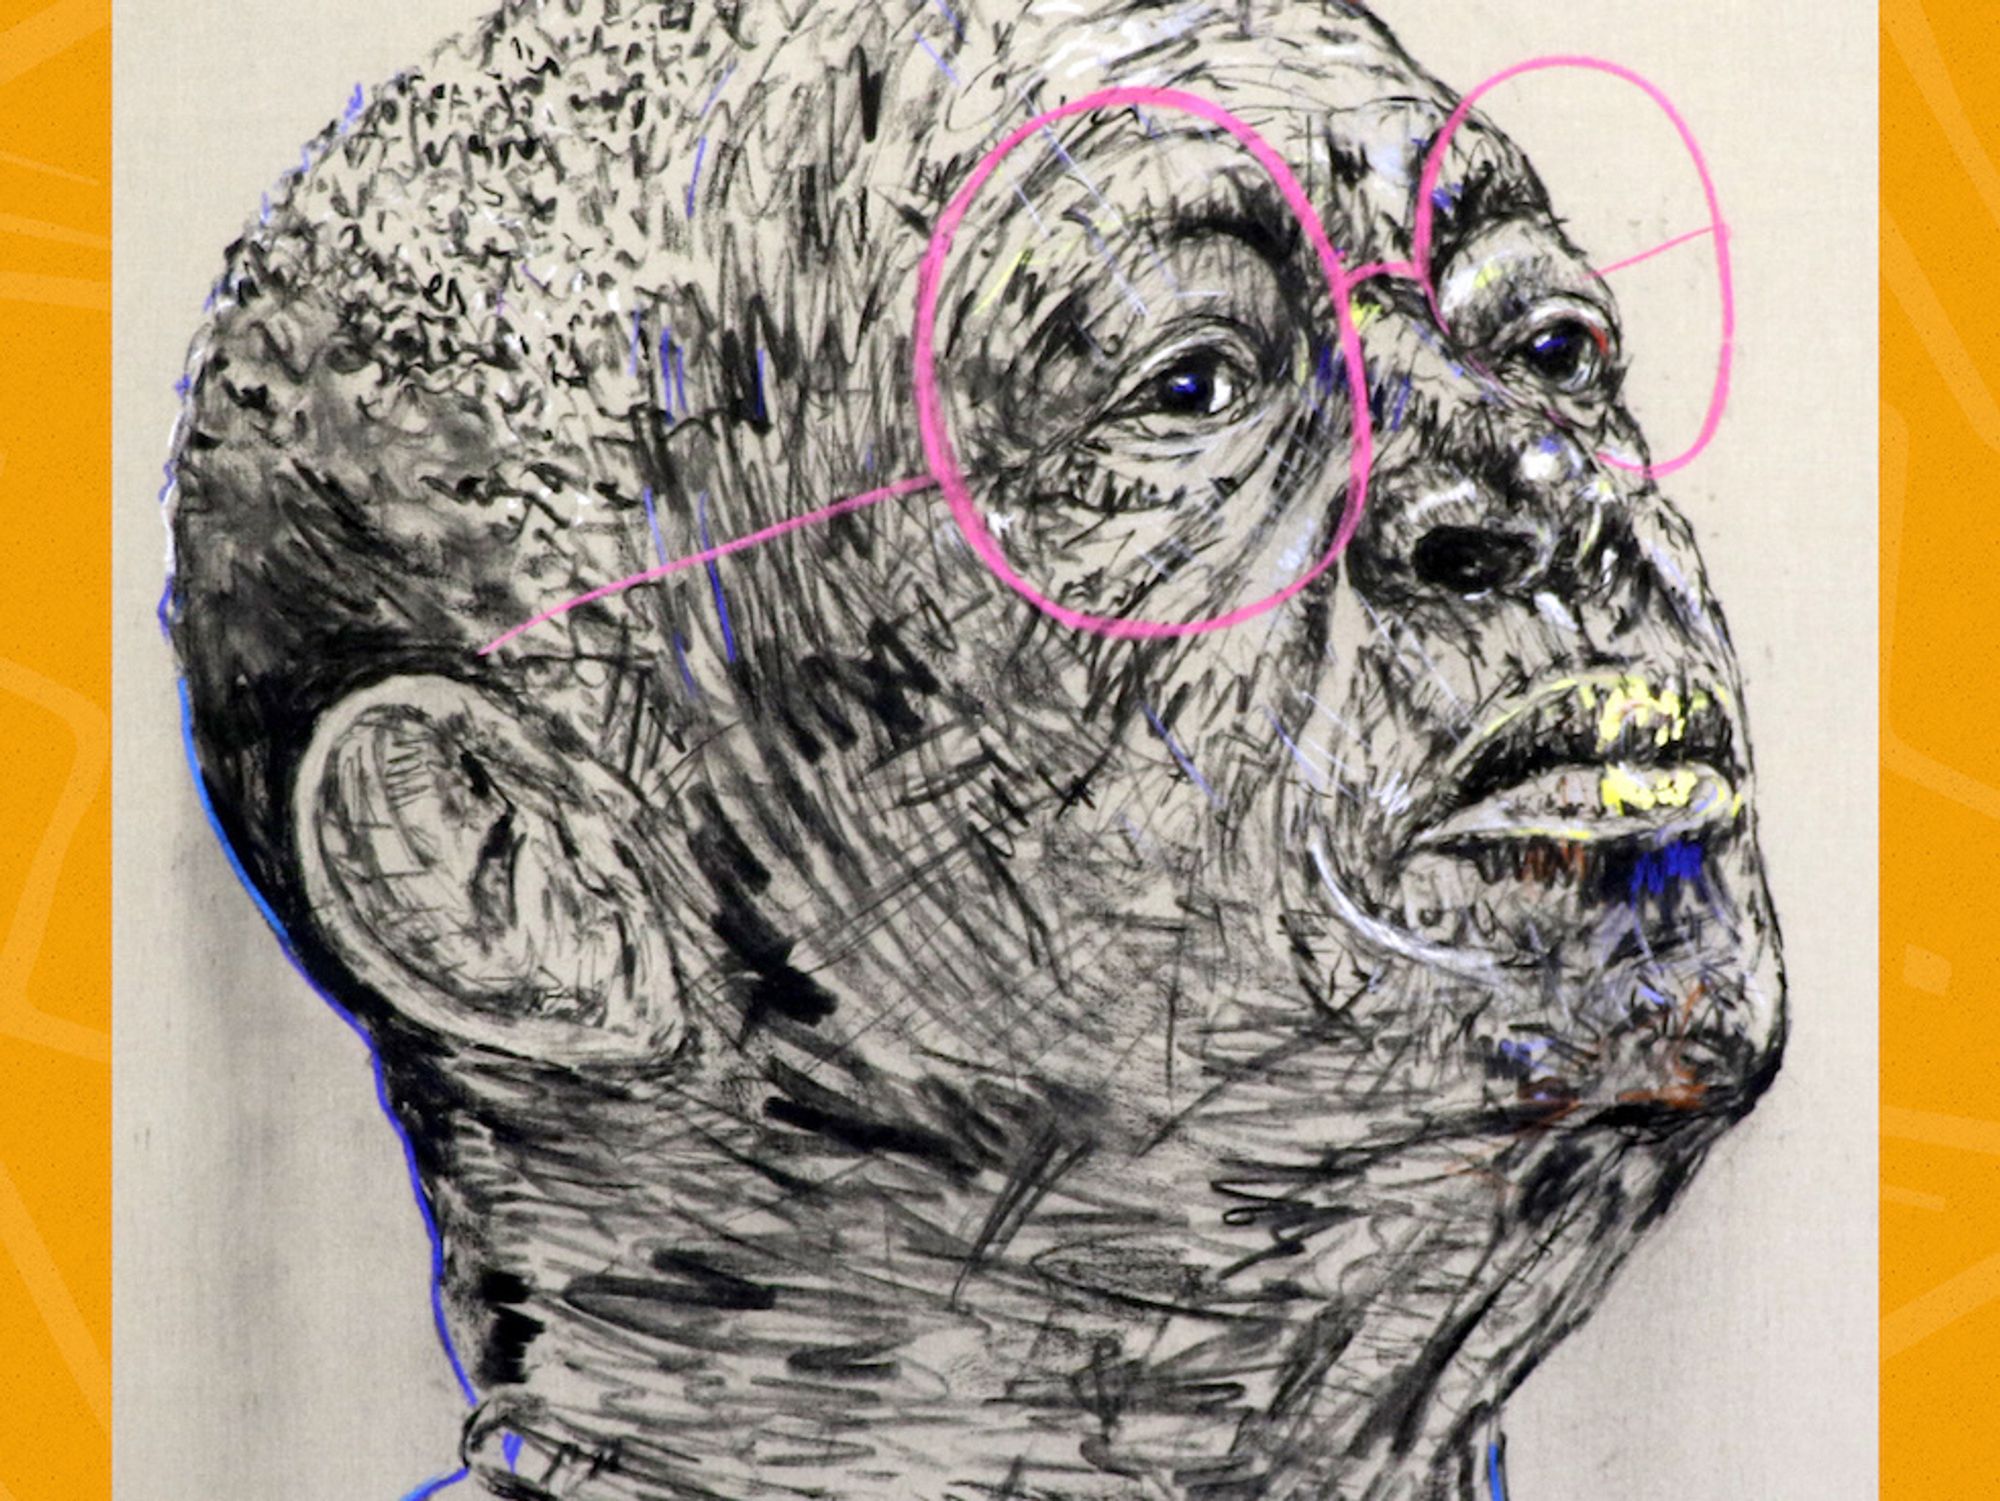 A painted portrait of Hugh Masekela. 